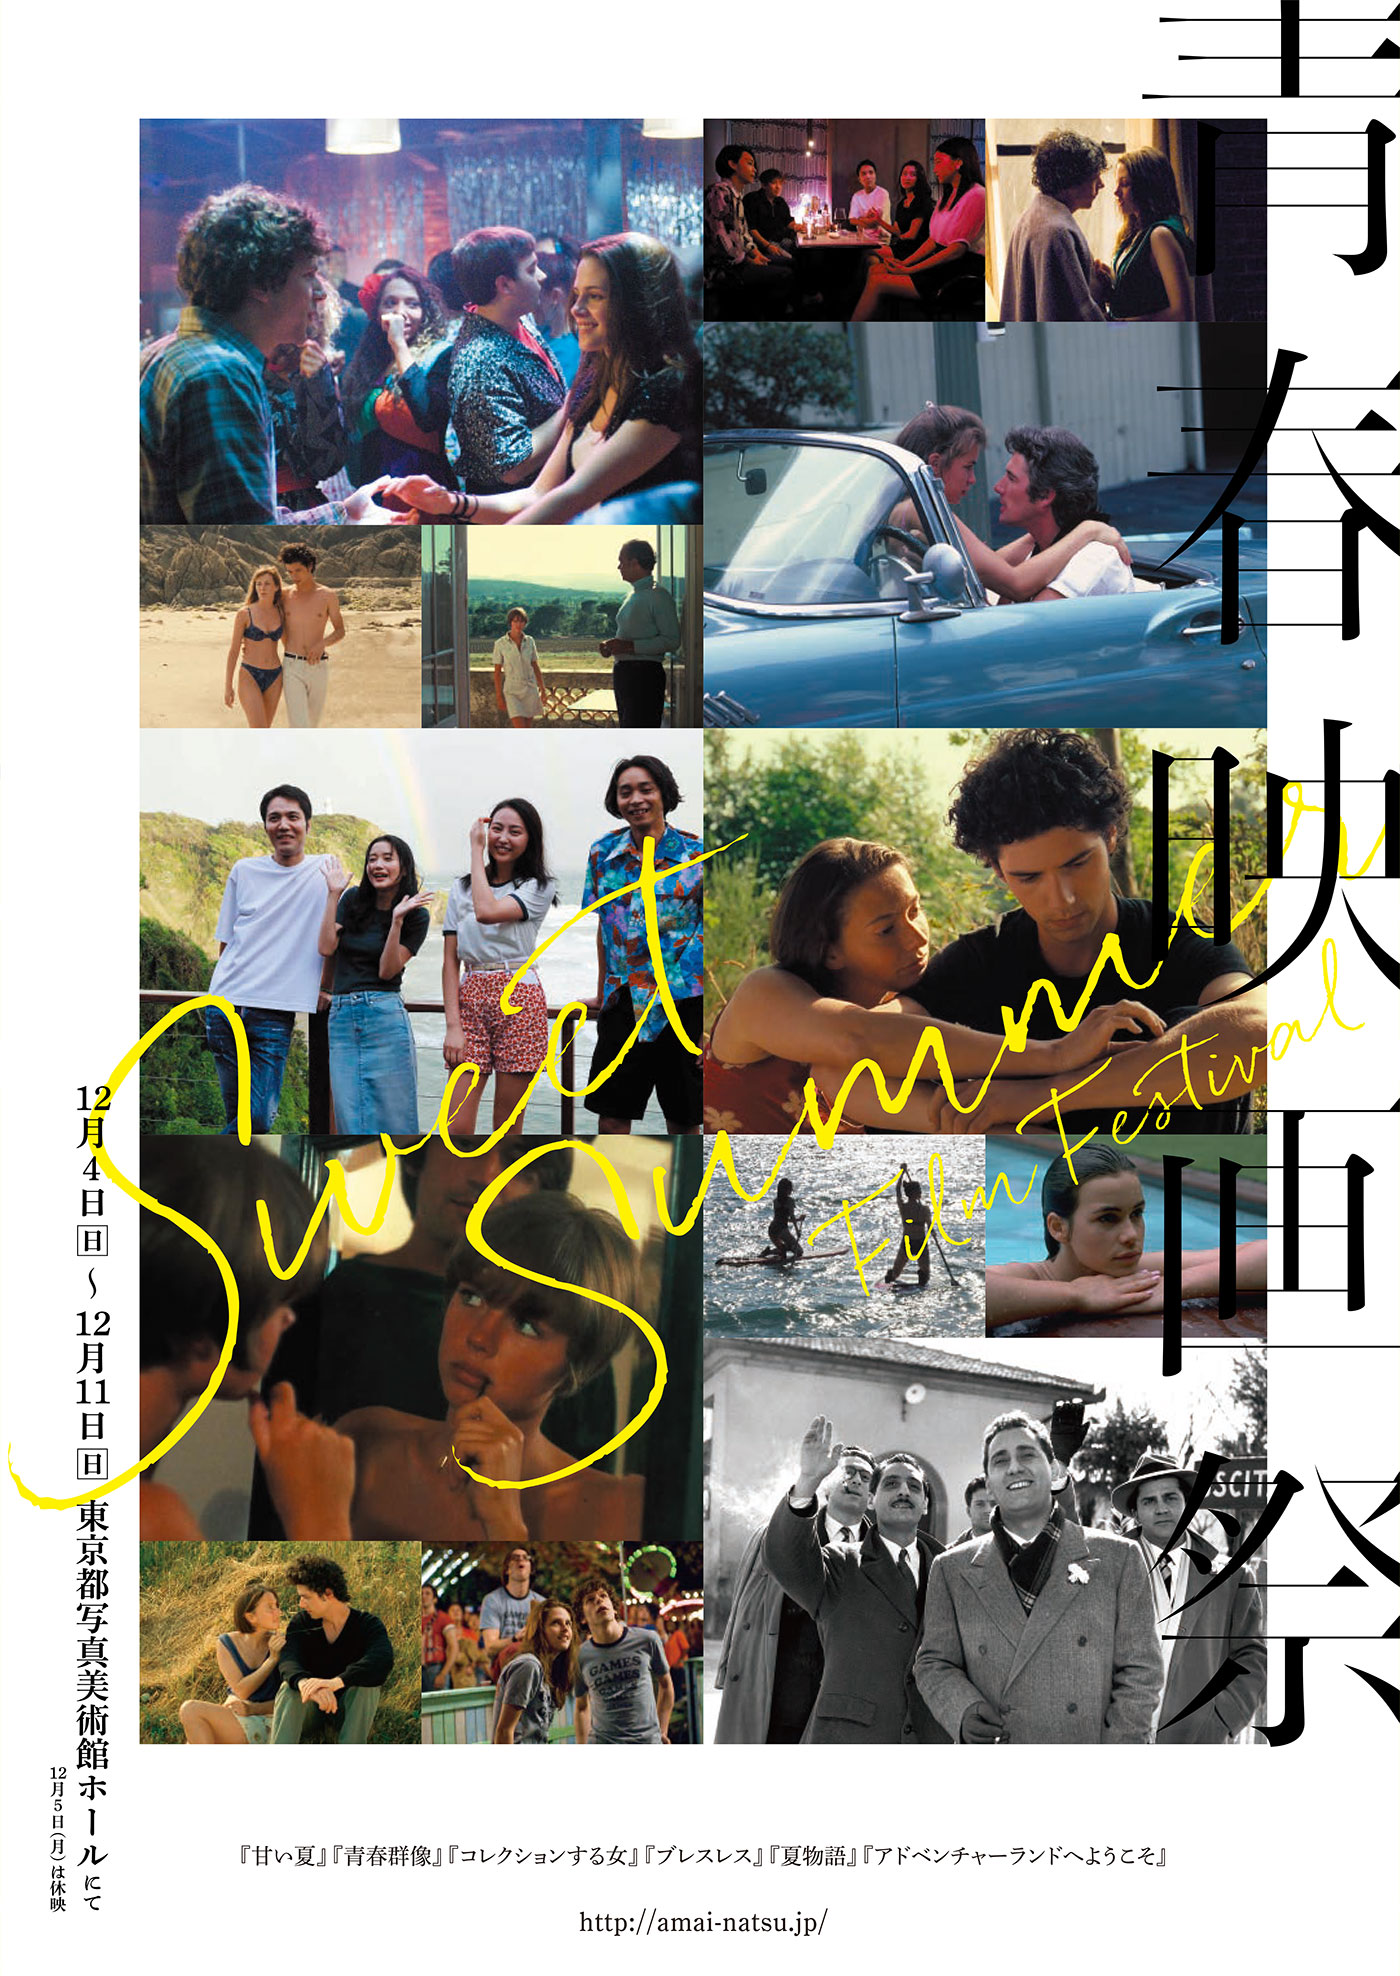 映画『甘い夏』公開記念【青春映画祭】公式サイト